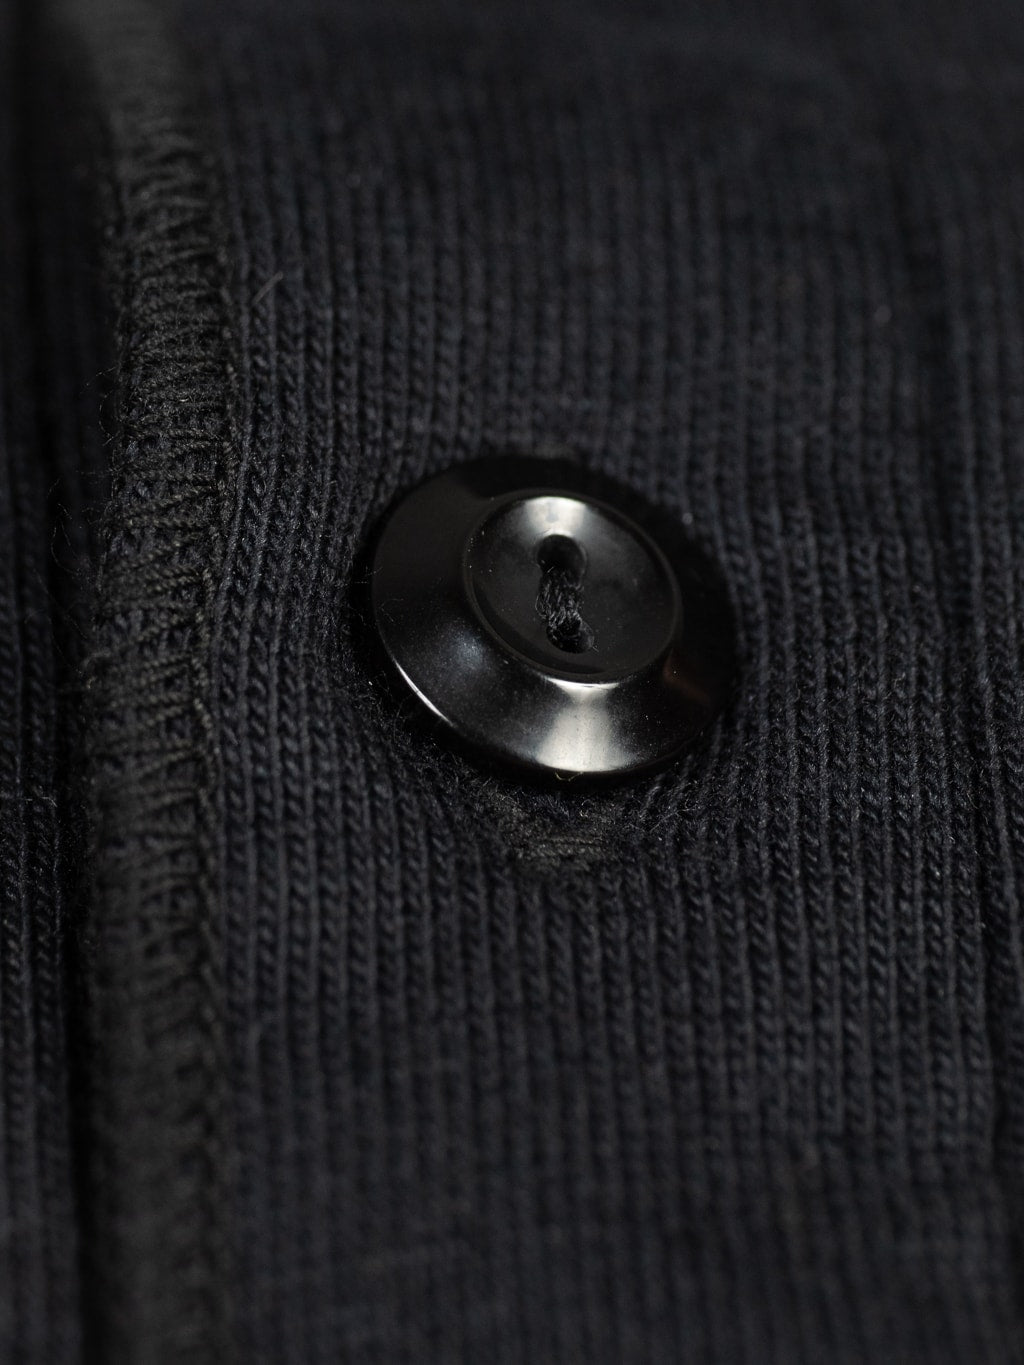 Ues ramayana henley neck tshirt black button detail